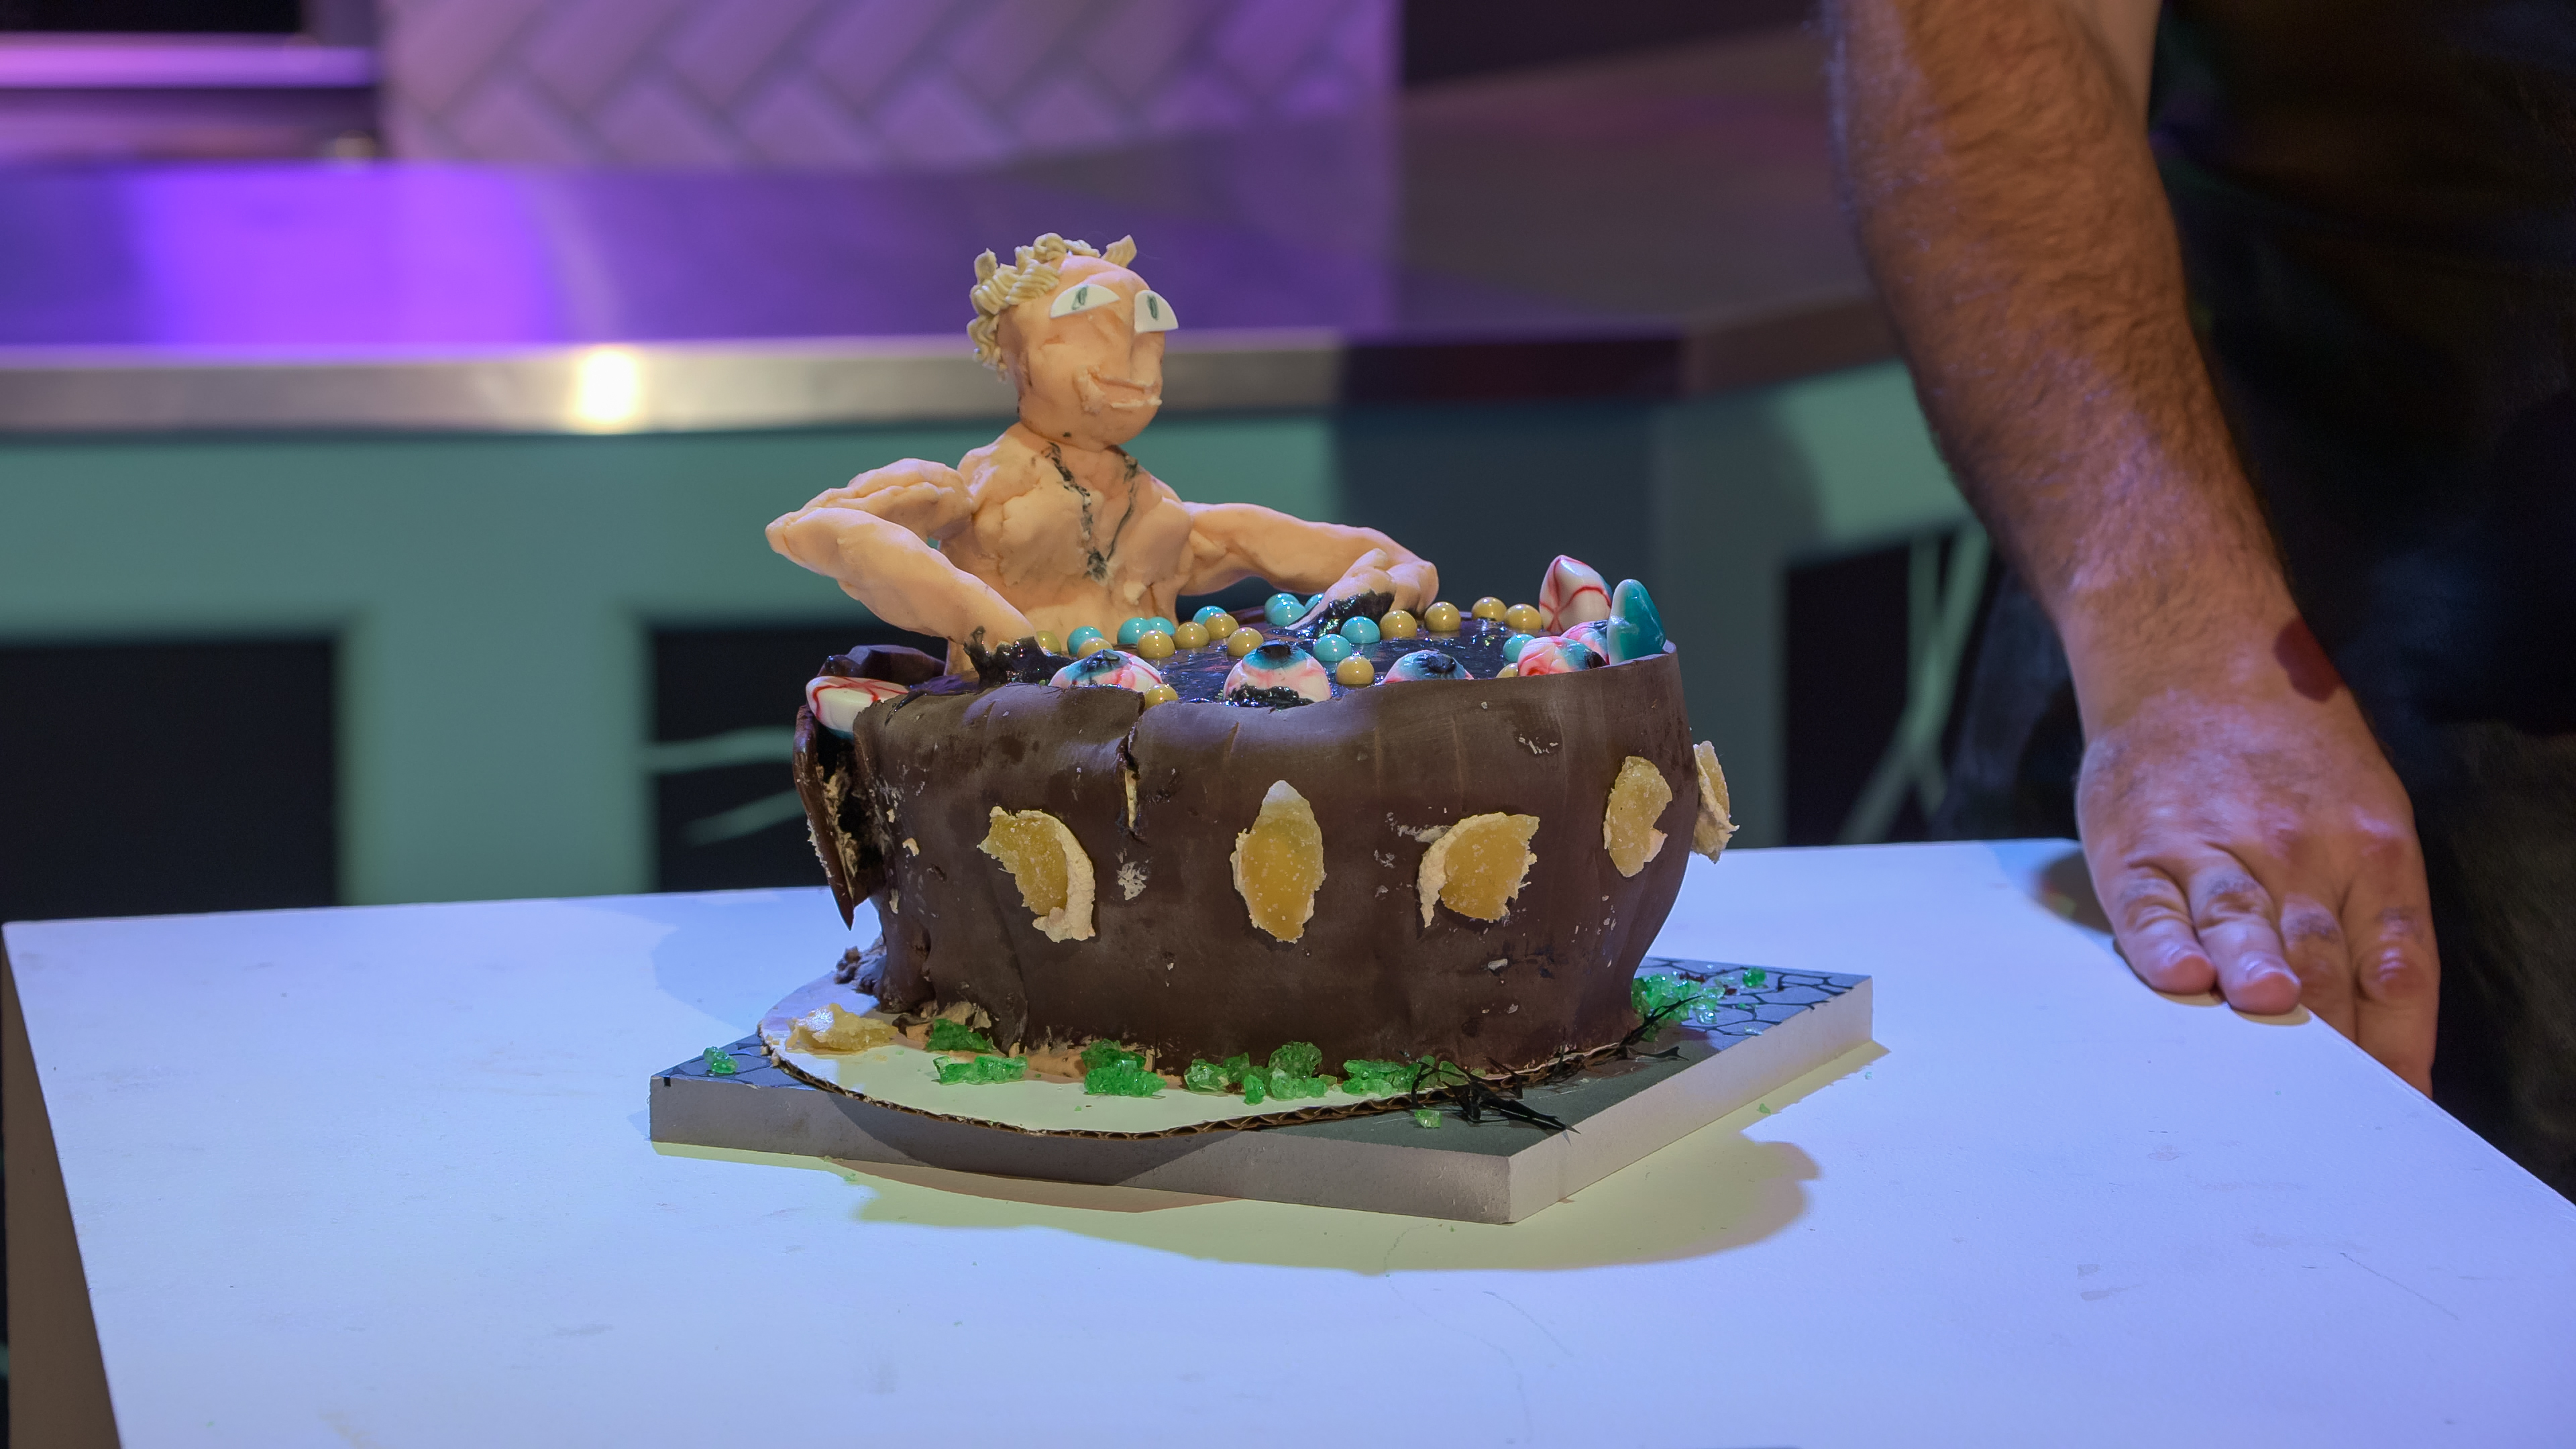 A terrible Geralt cake